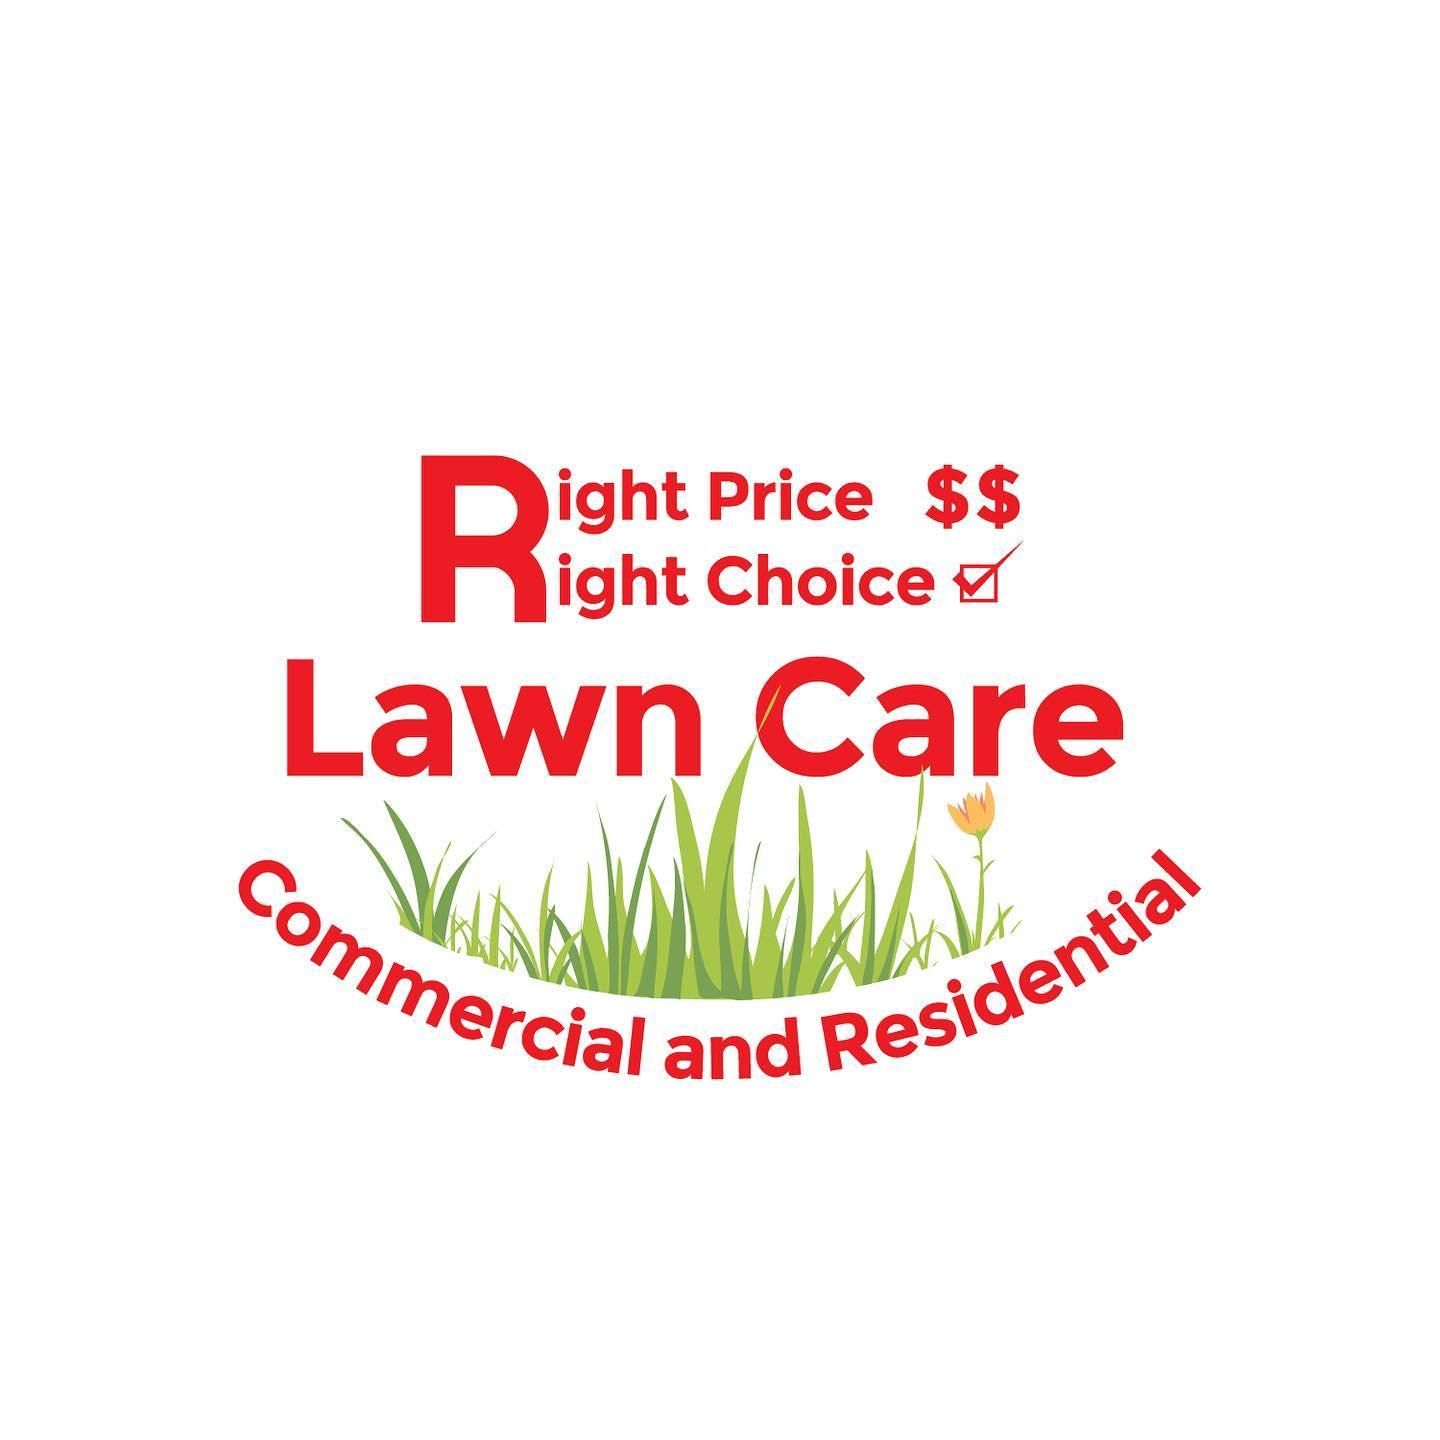 Lawn Care for The Right Price Right Choice Lawn Care Services in Murfreesboro, TN